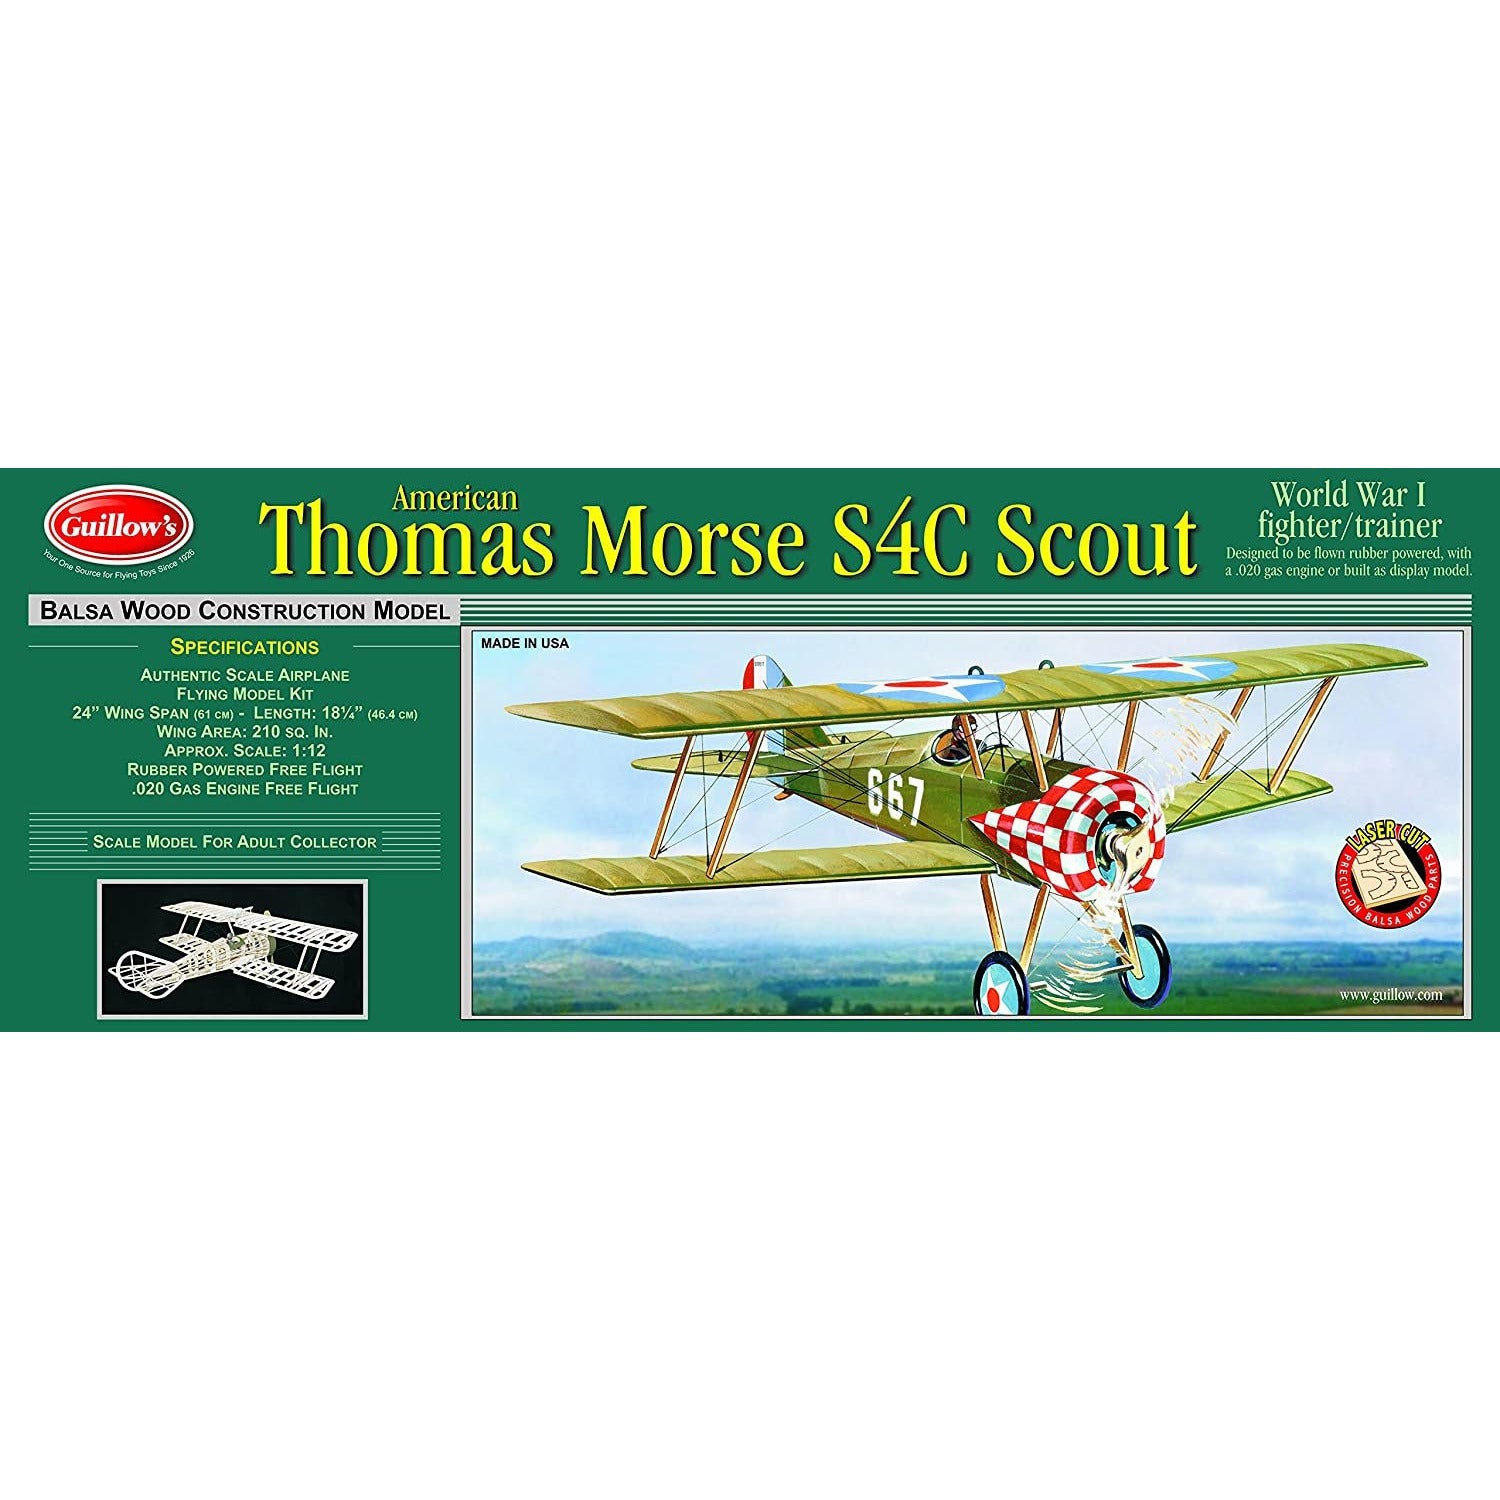 Guillows Thomas Morse Scout